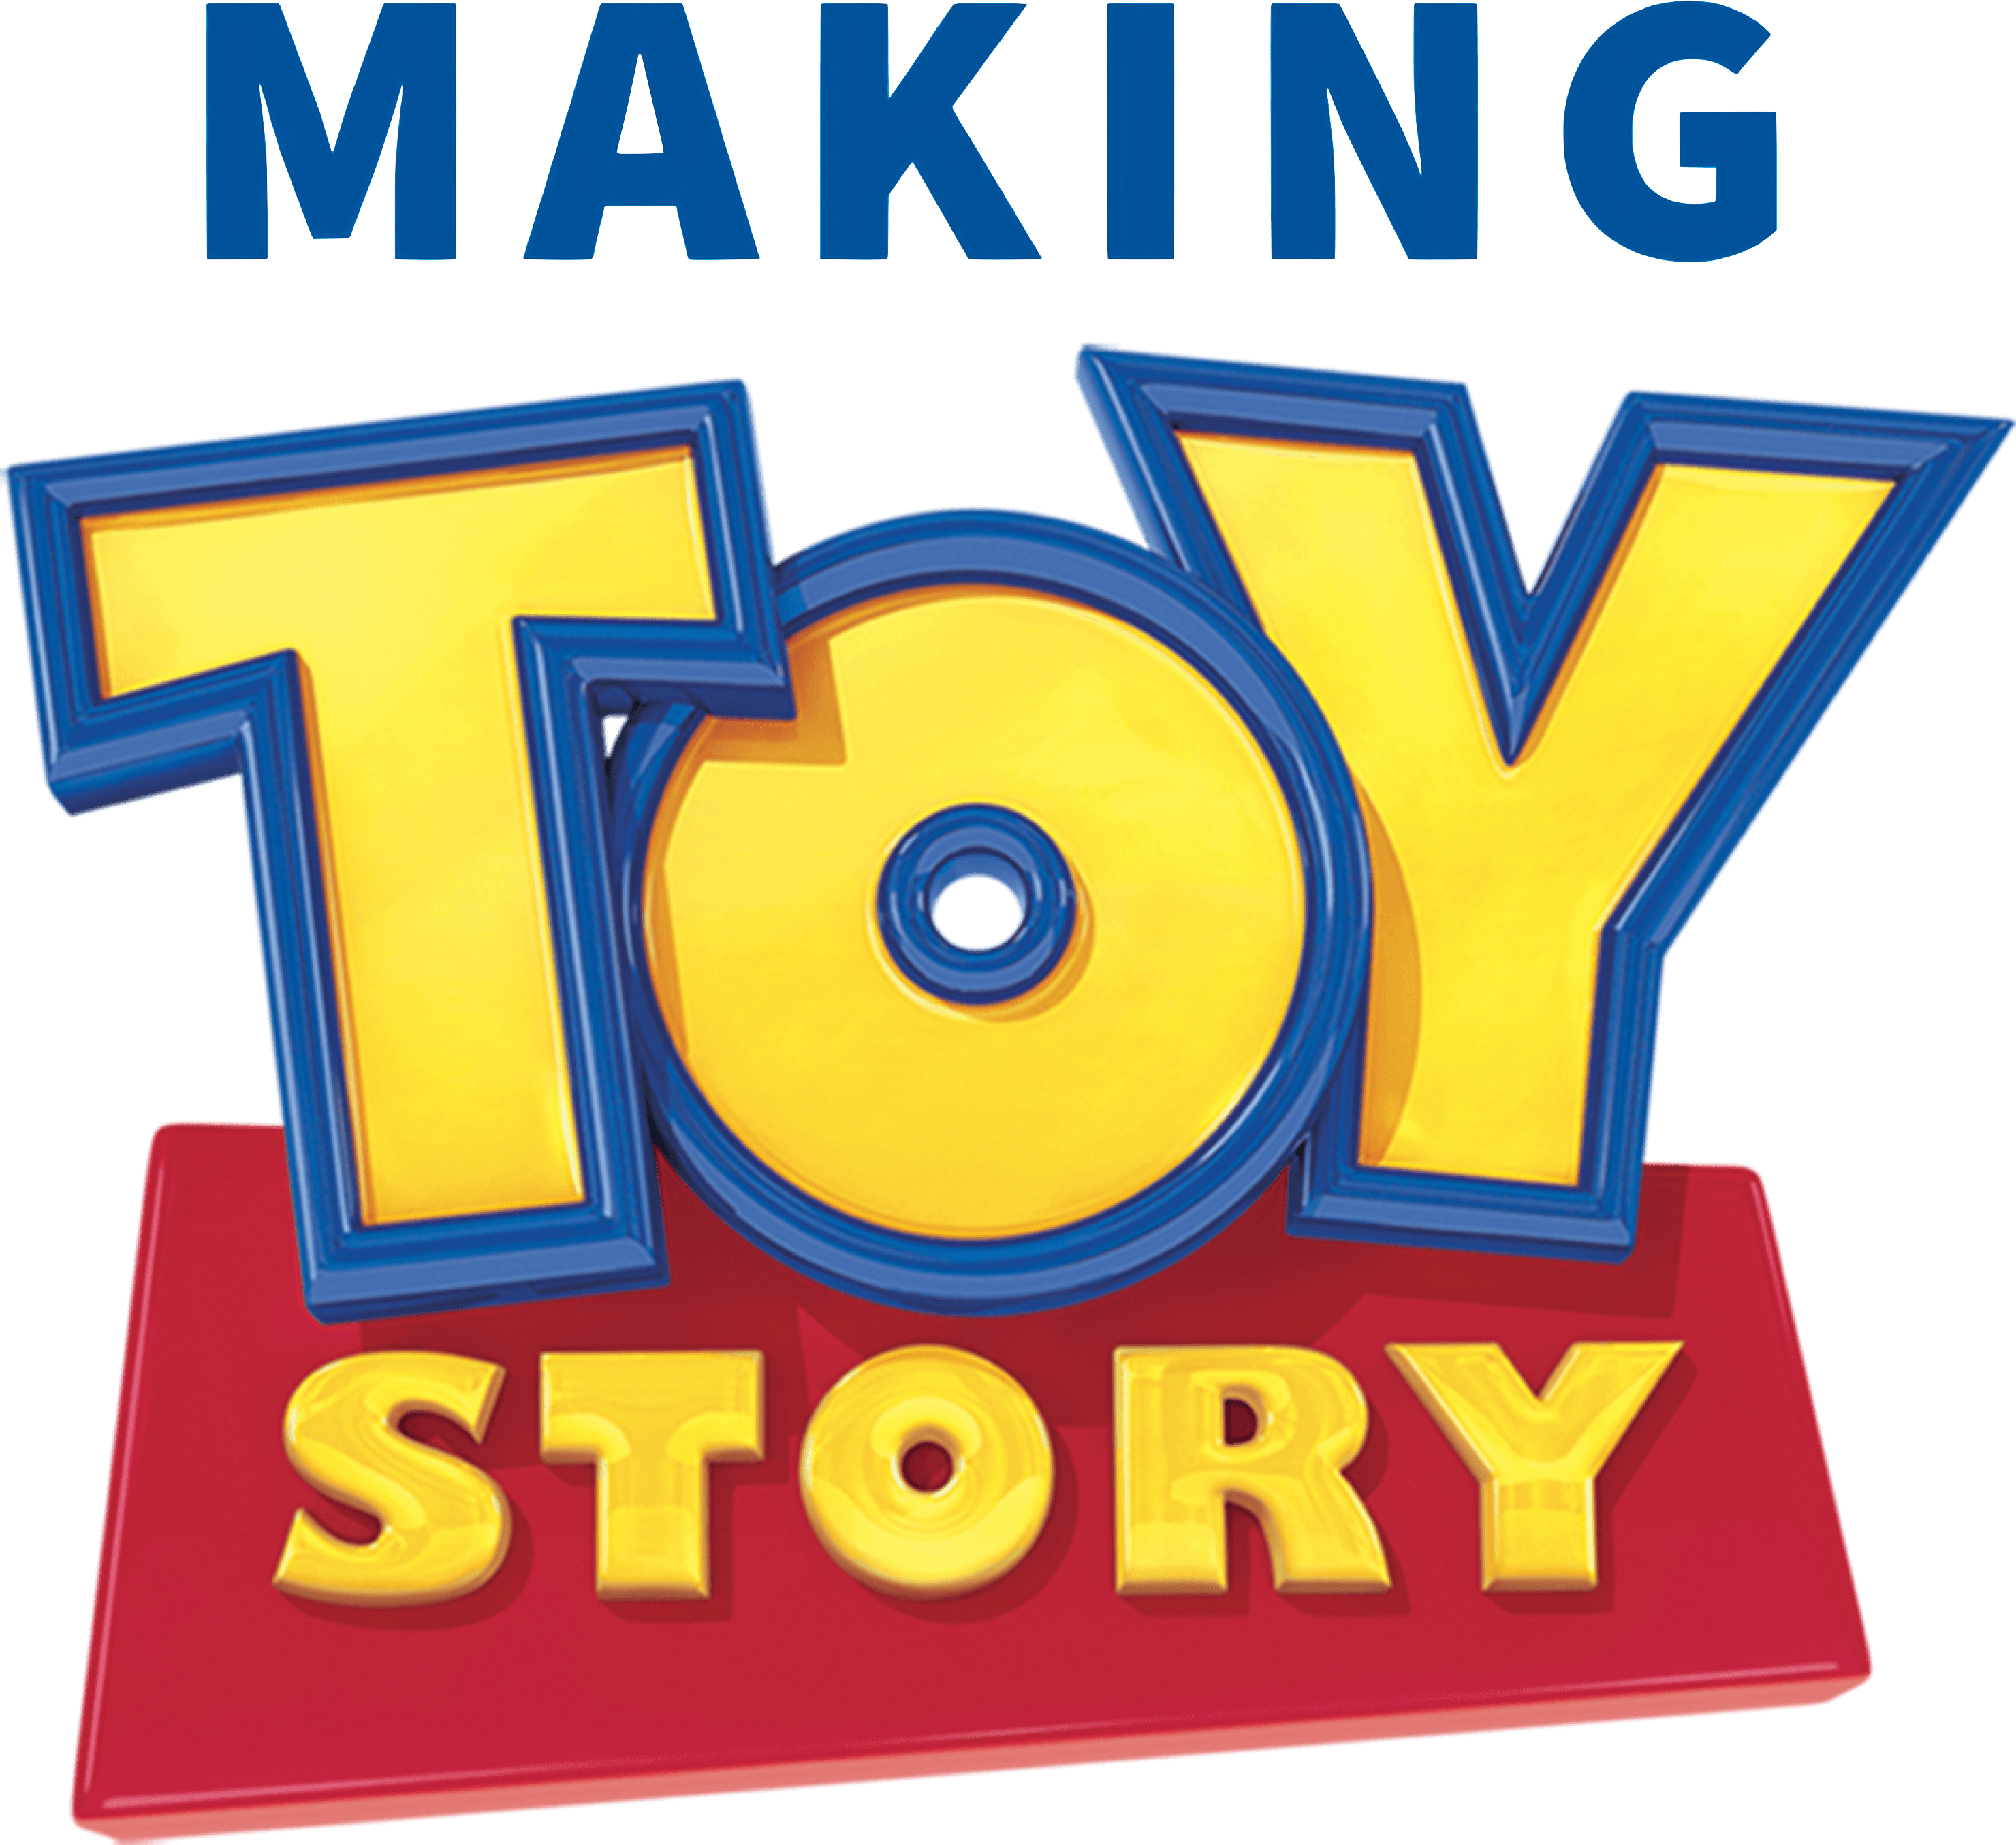 Making 'Toy Story' logo